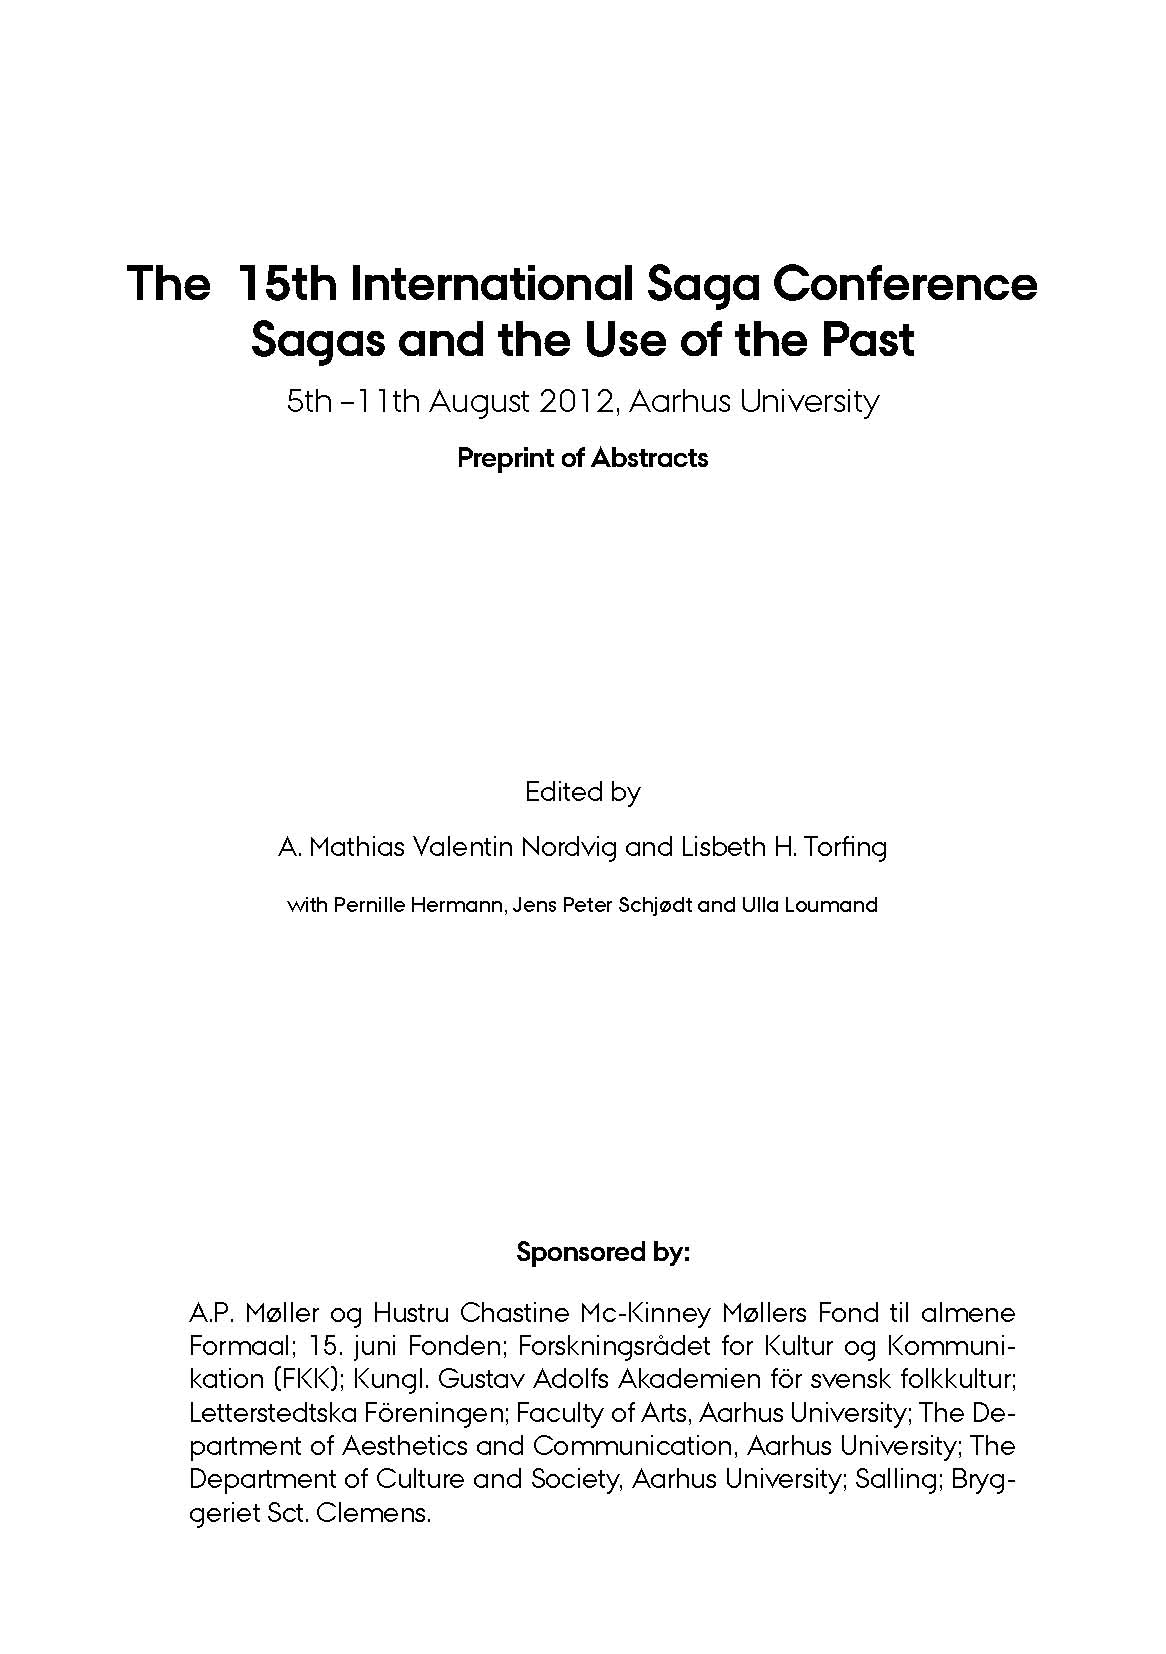 The Fifteenth International Saga Conference